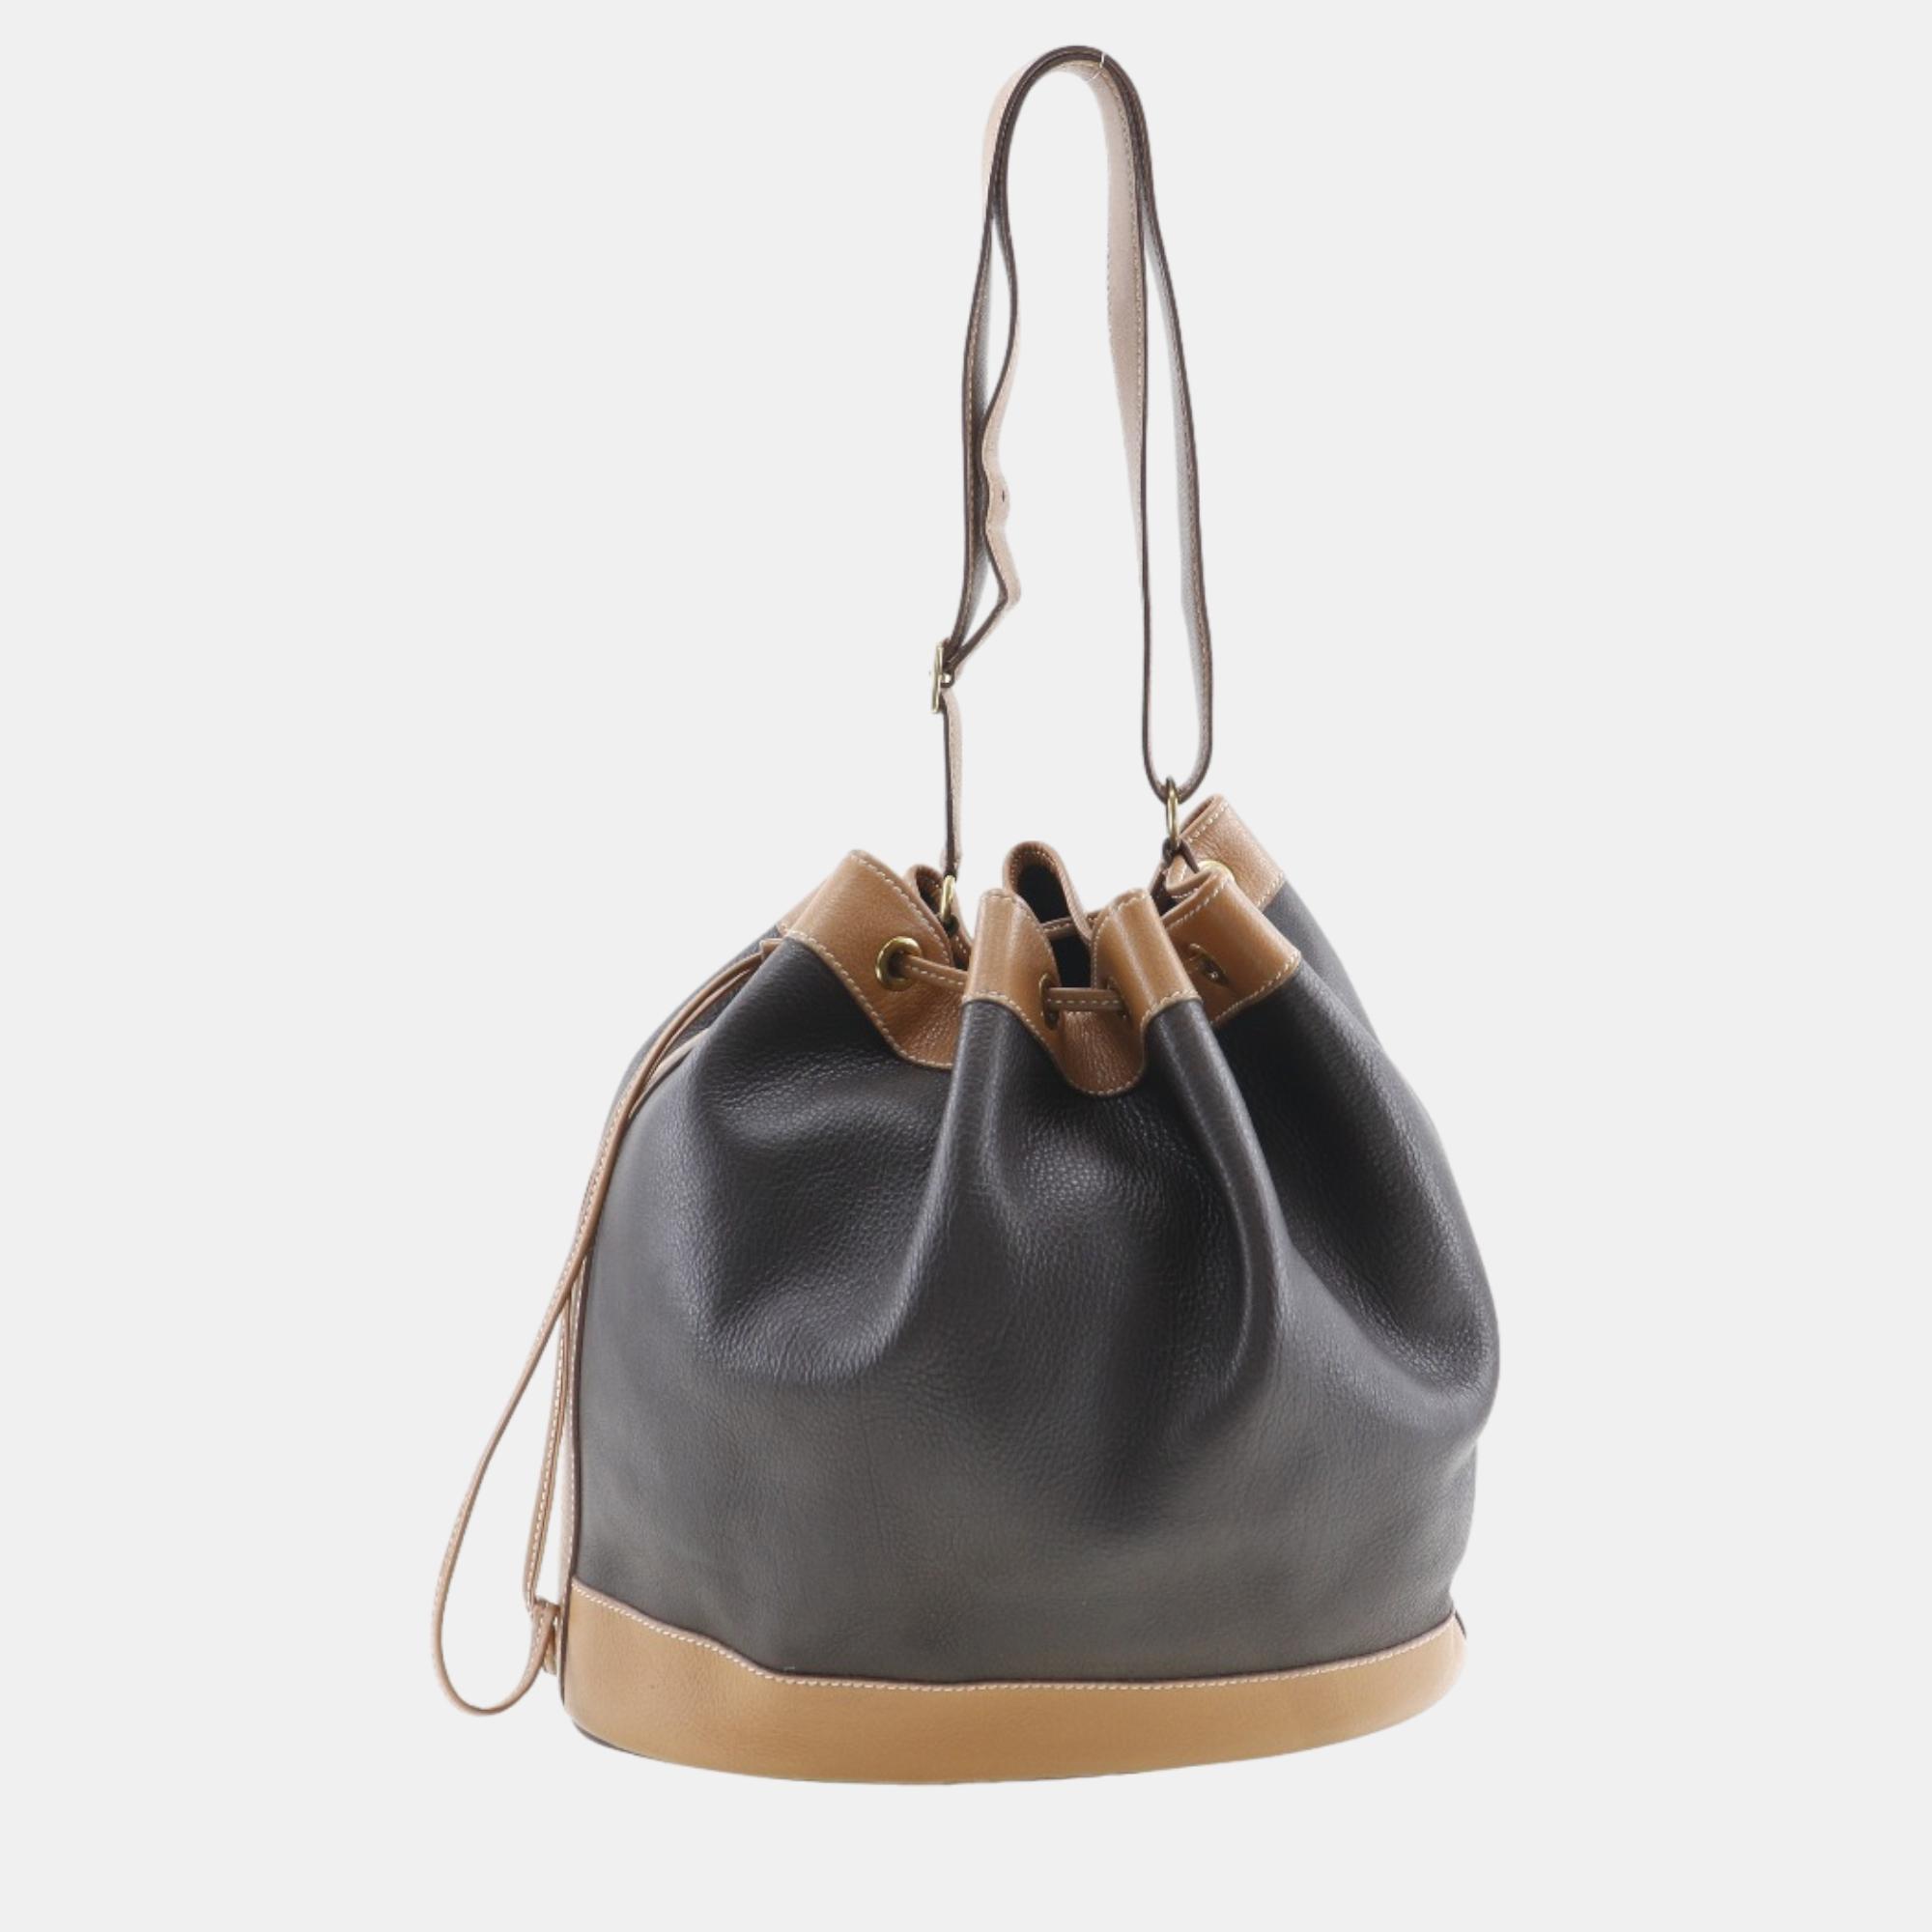 Hermes brown leather leather market gm drawstring bag